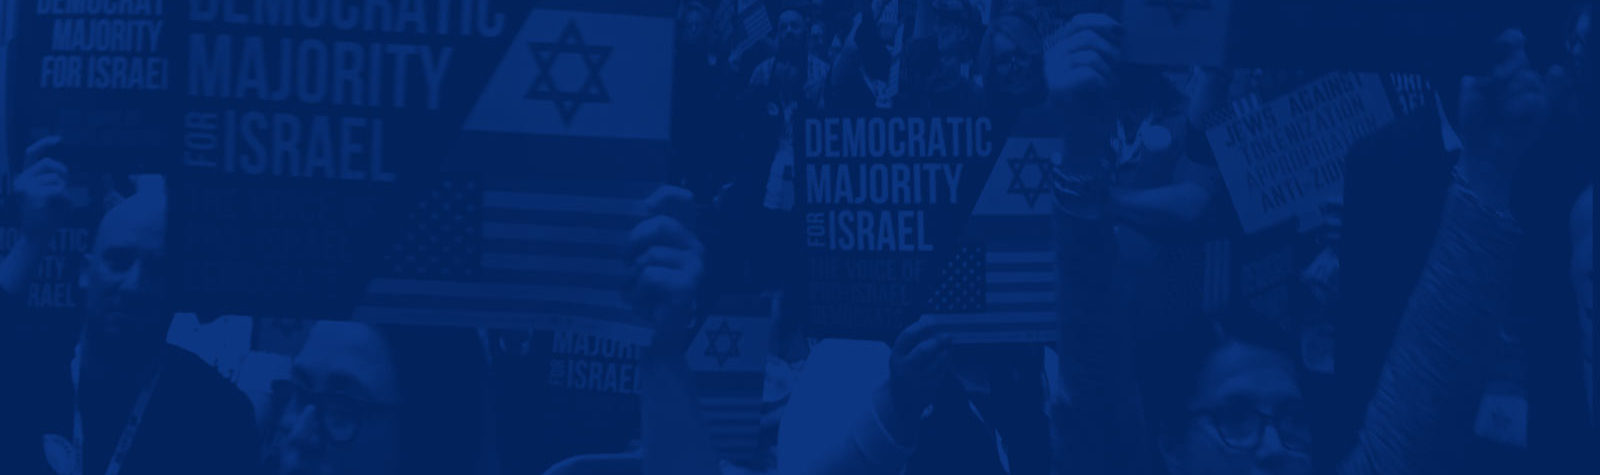 Rashida Tlaib Draws Attack Ads From Pro-Israel Democratic Group